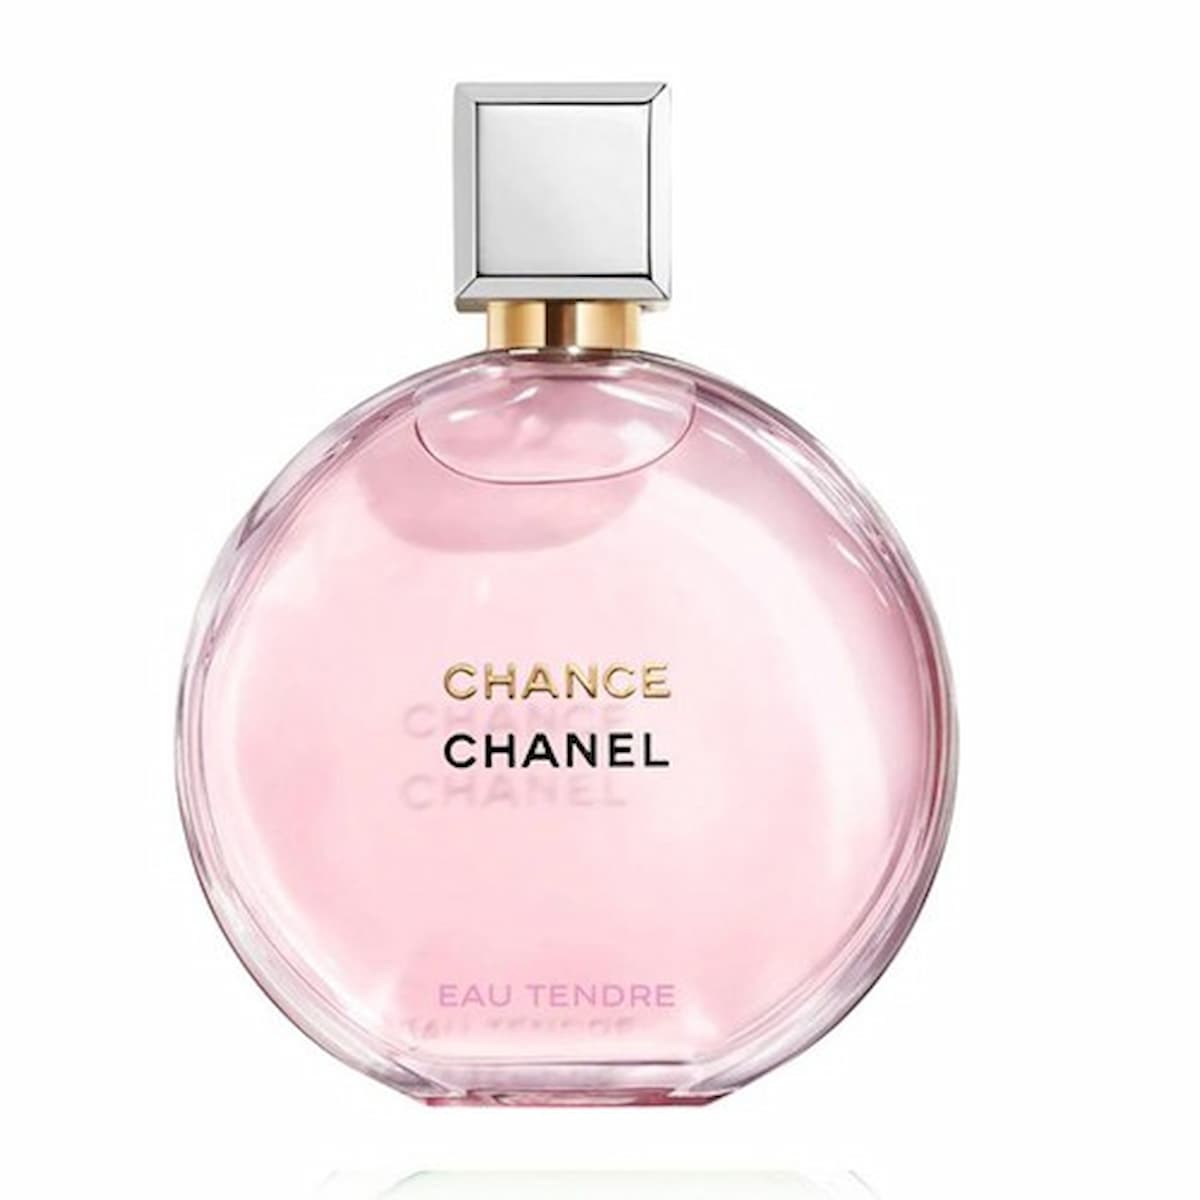 Nước hoa nữ Chanel Coco Eau De Parfum của hãng Chanel